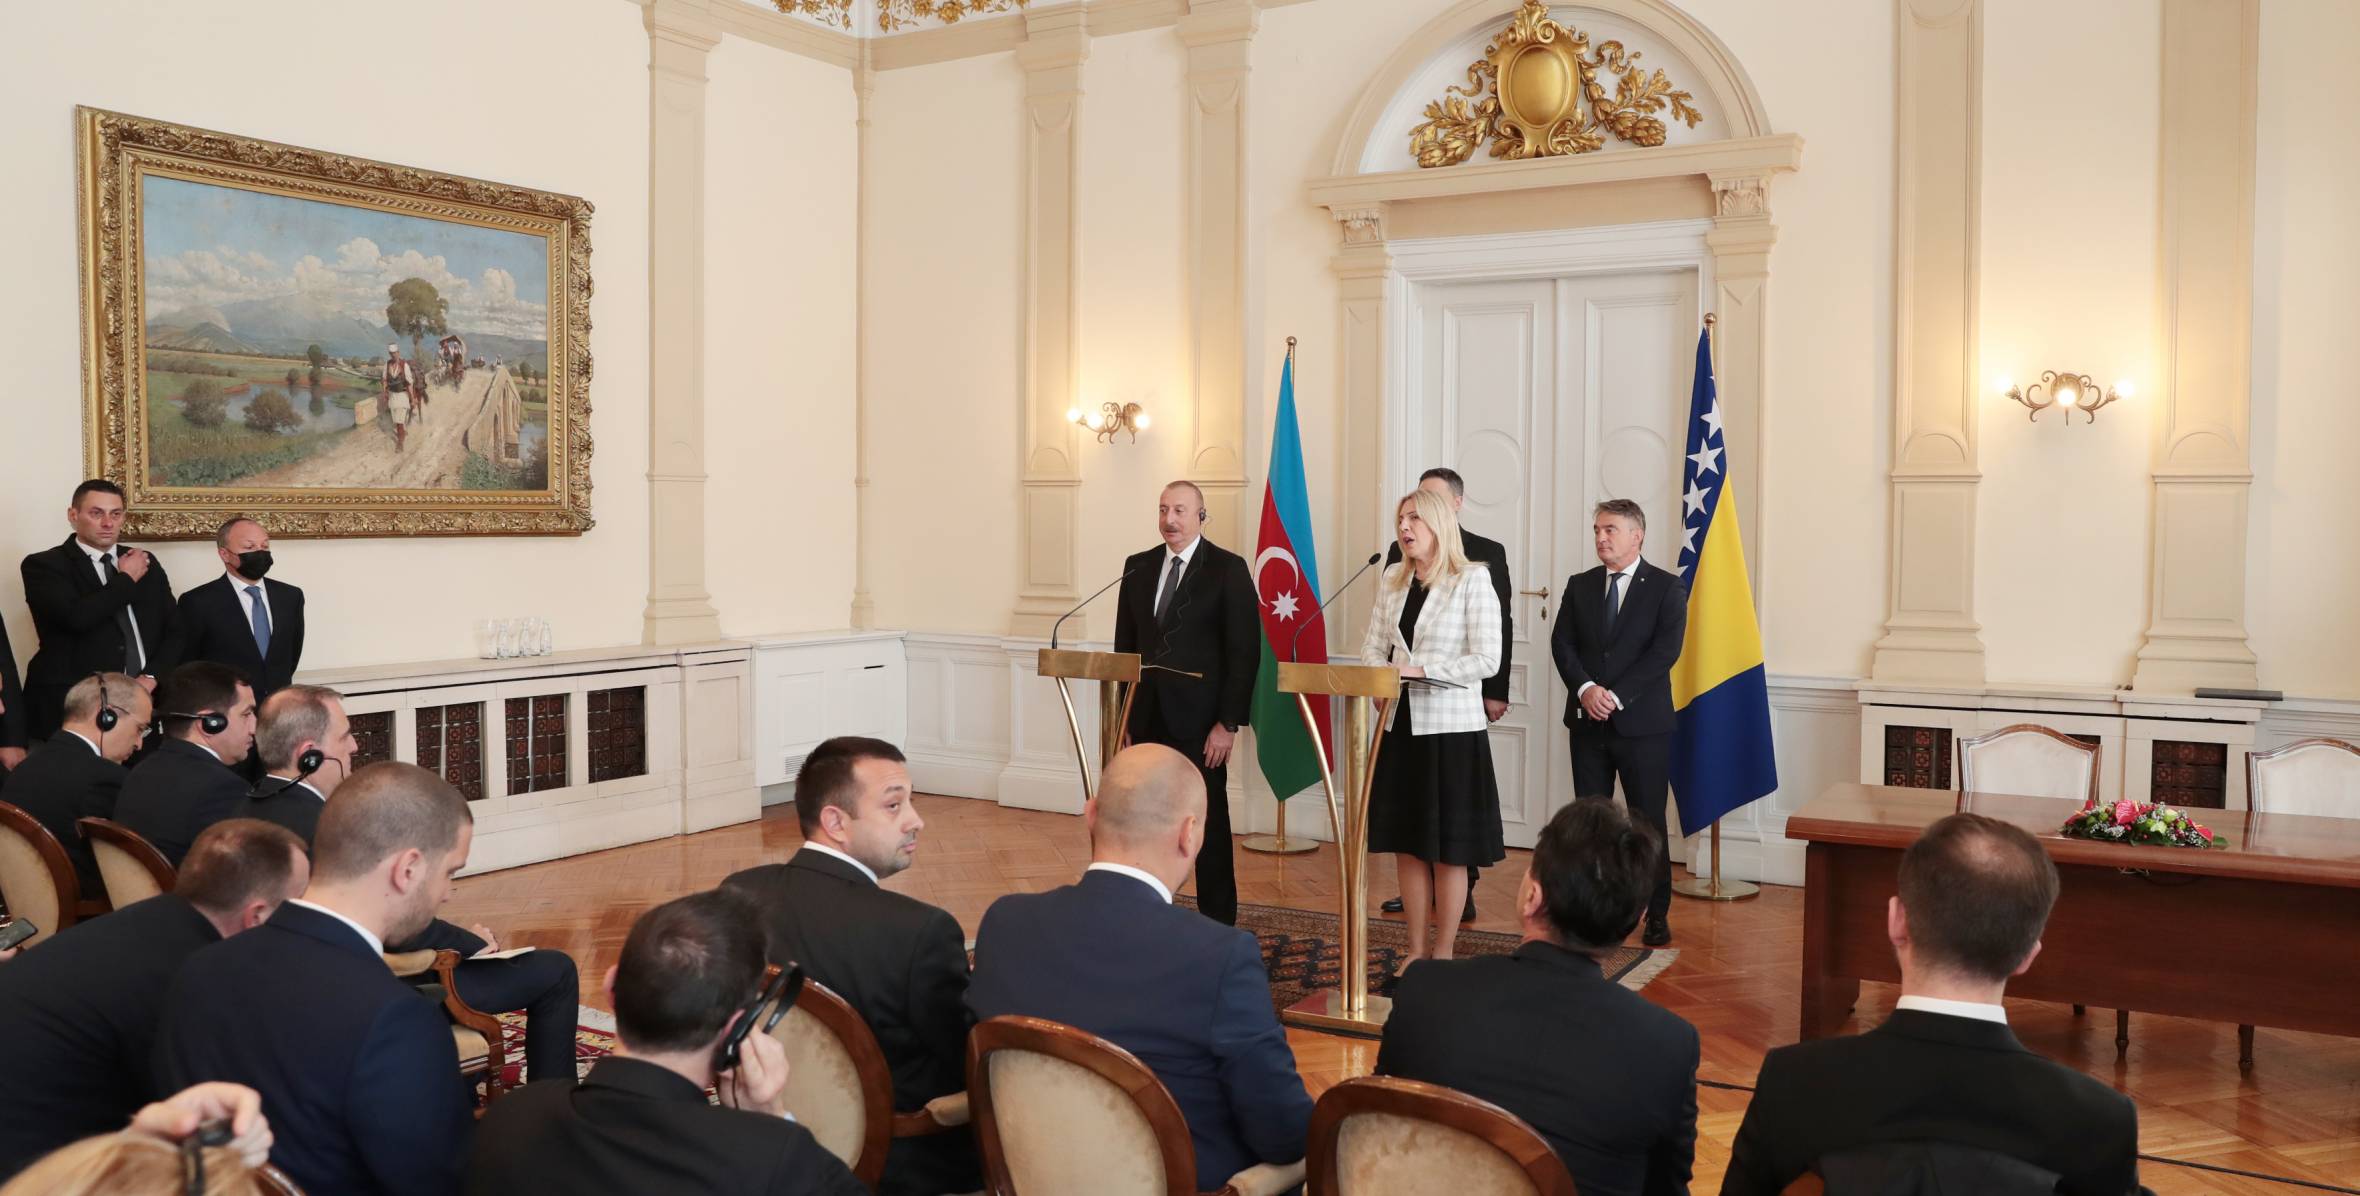 Ilham Aliyev and Chairwoman of Presidency of Bosnia and Herzegovina Željka Cvijanović made press statements